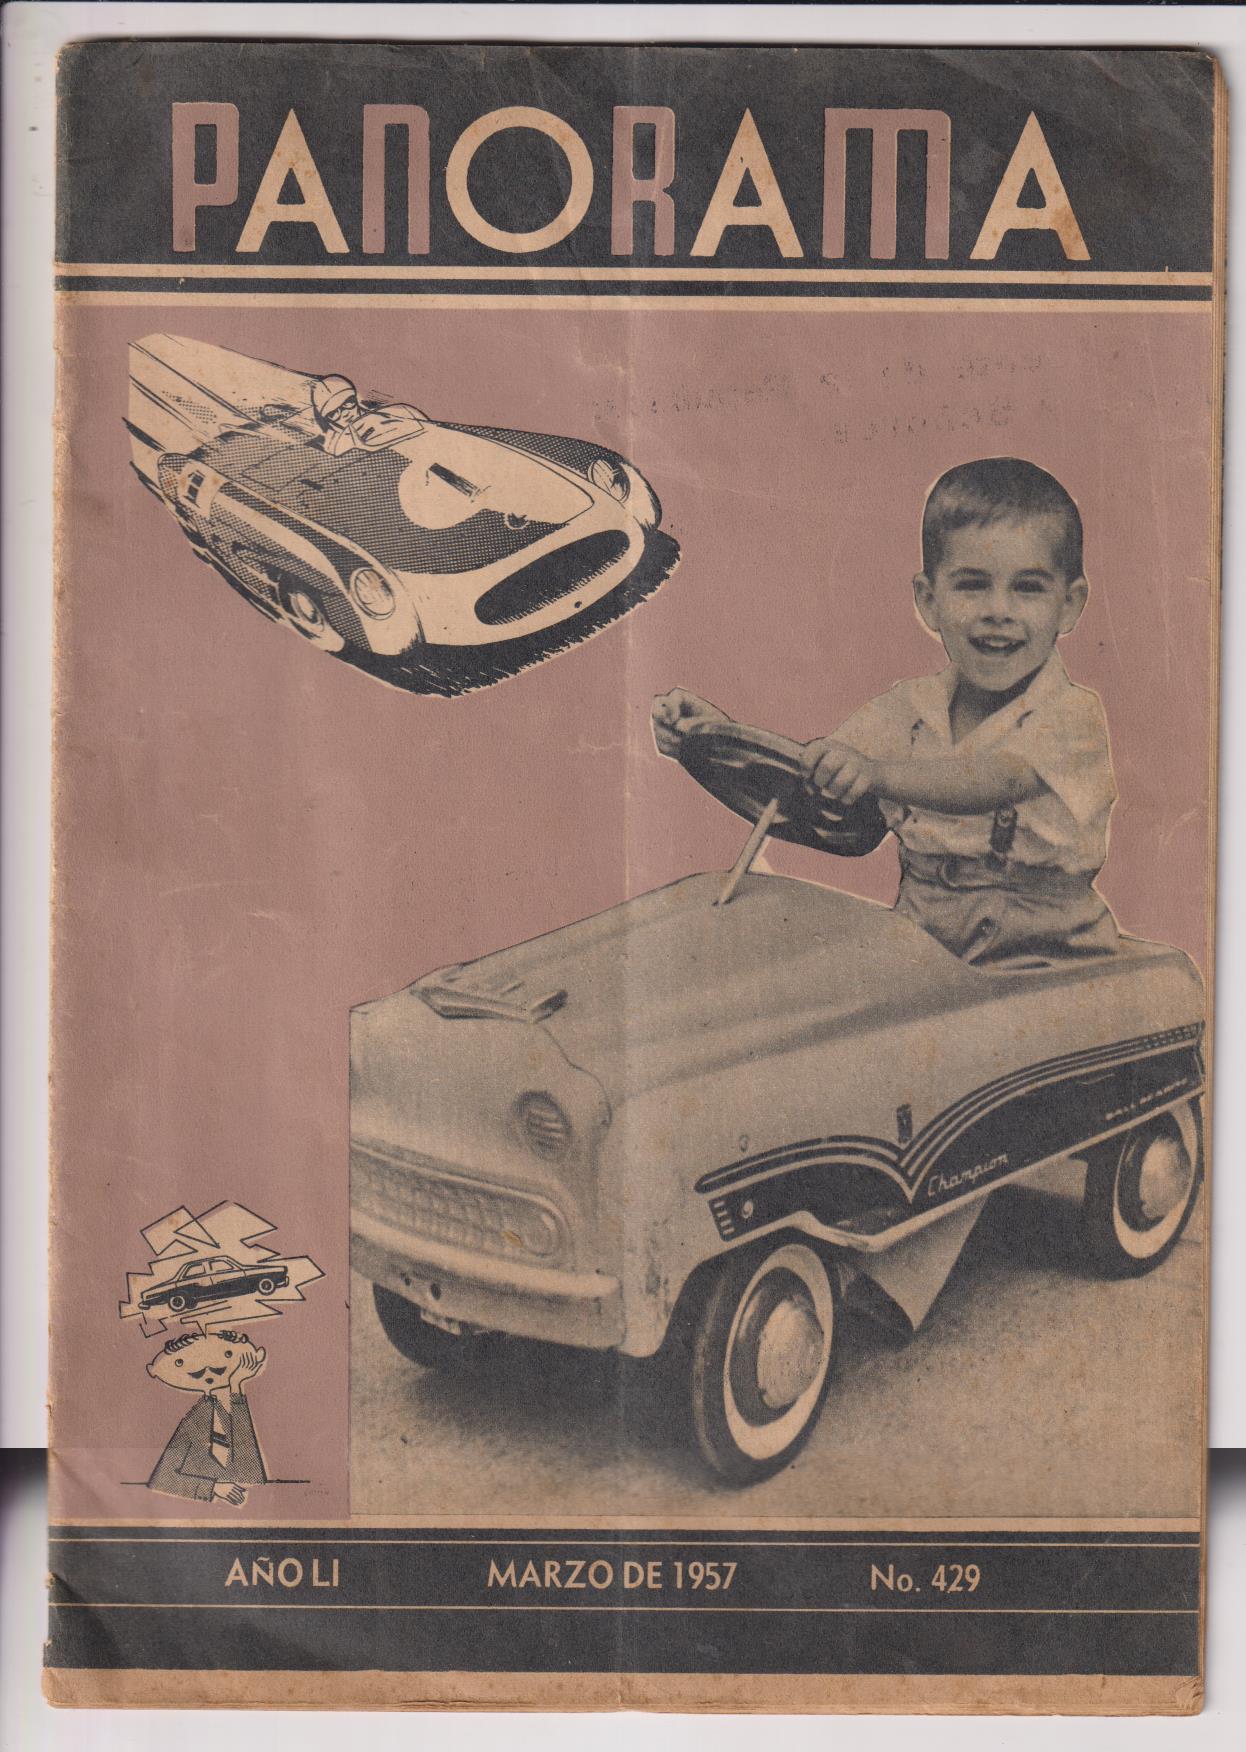 Revista Panorama nº 429. México, Marzo de 1957. (28x20) 32 páginas